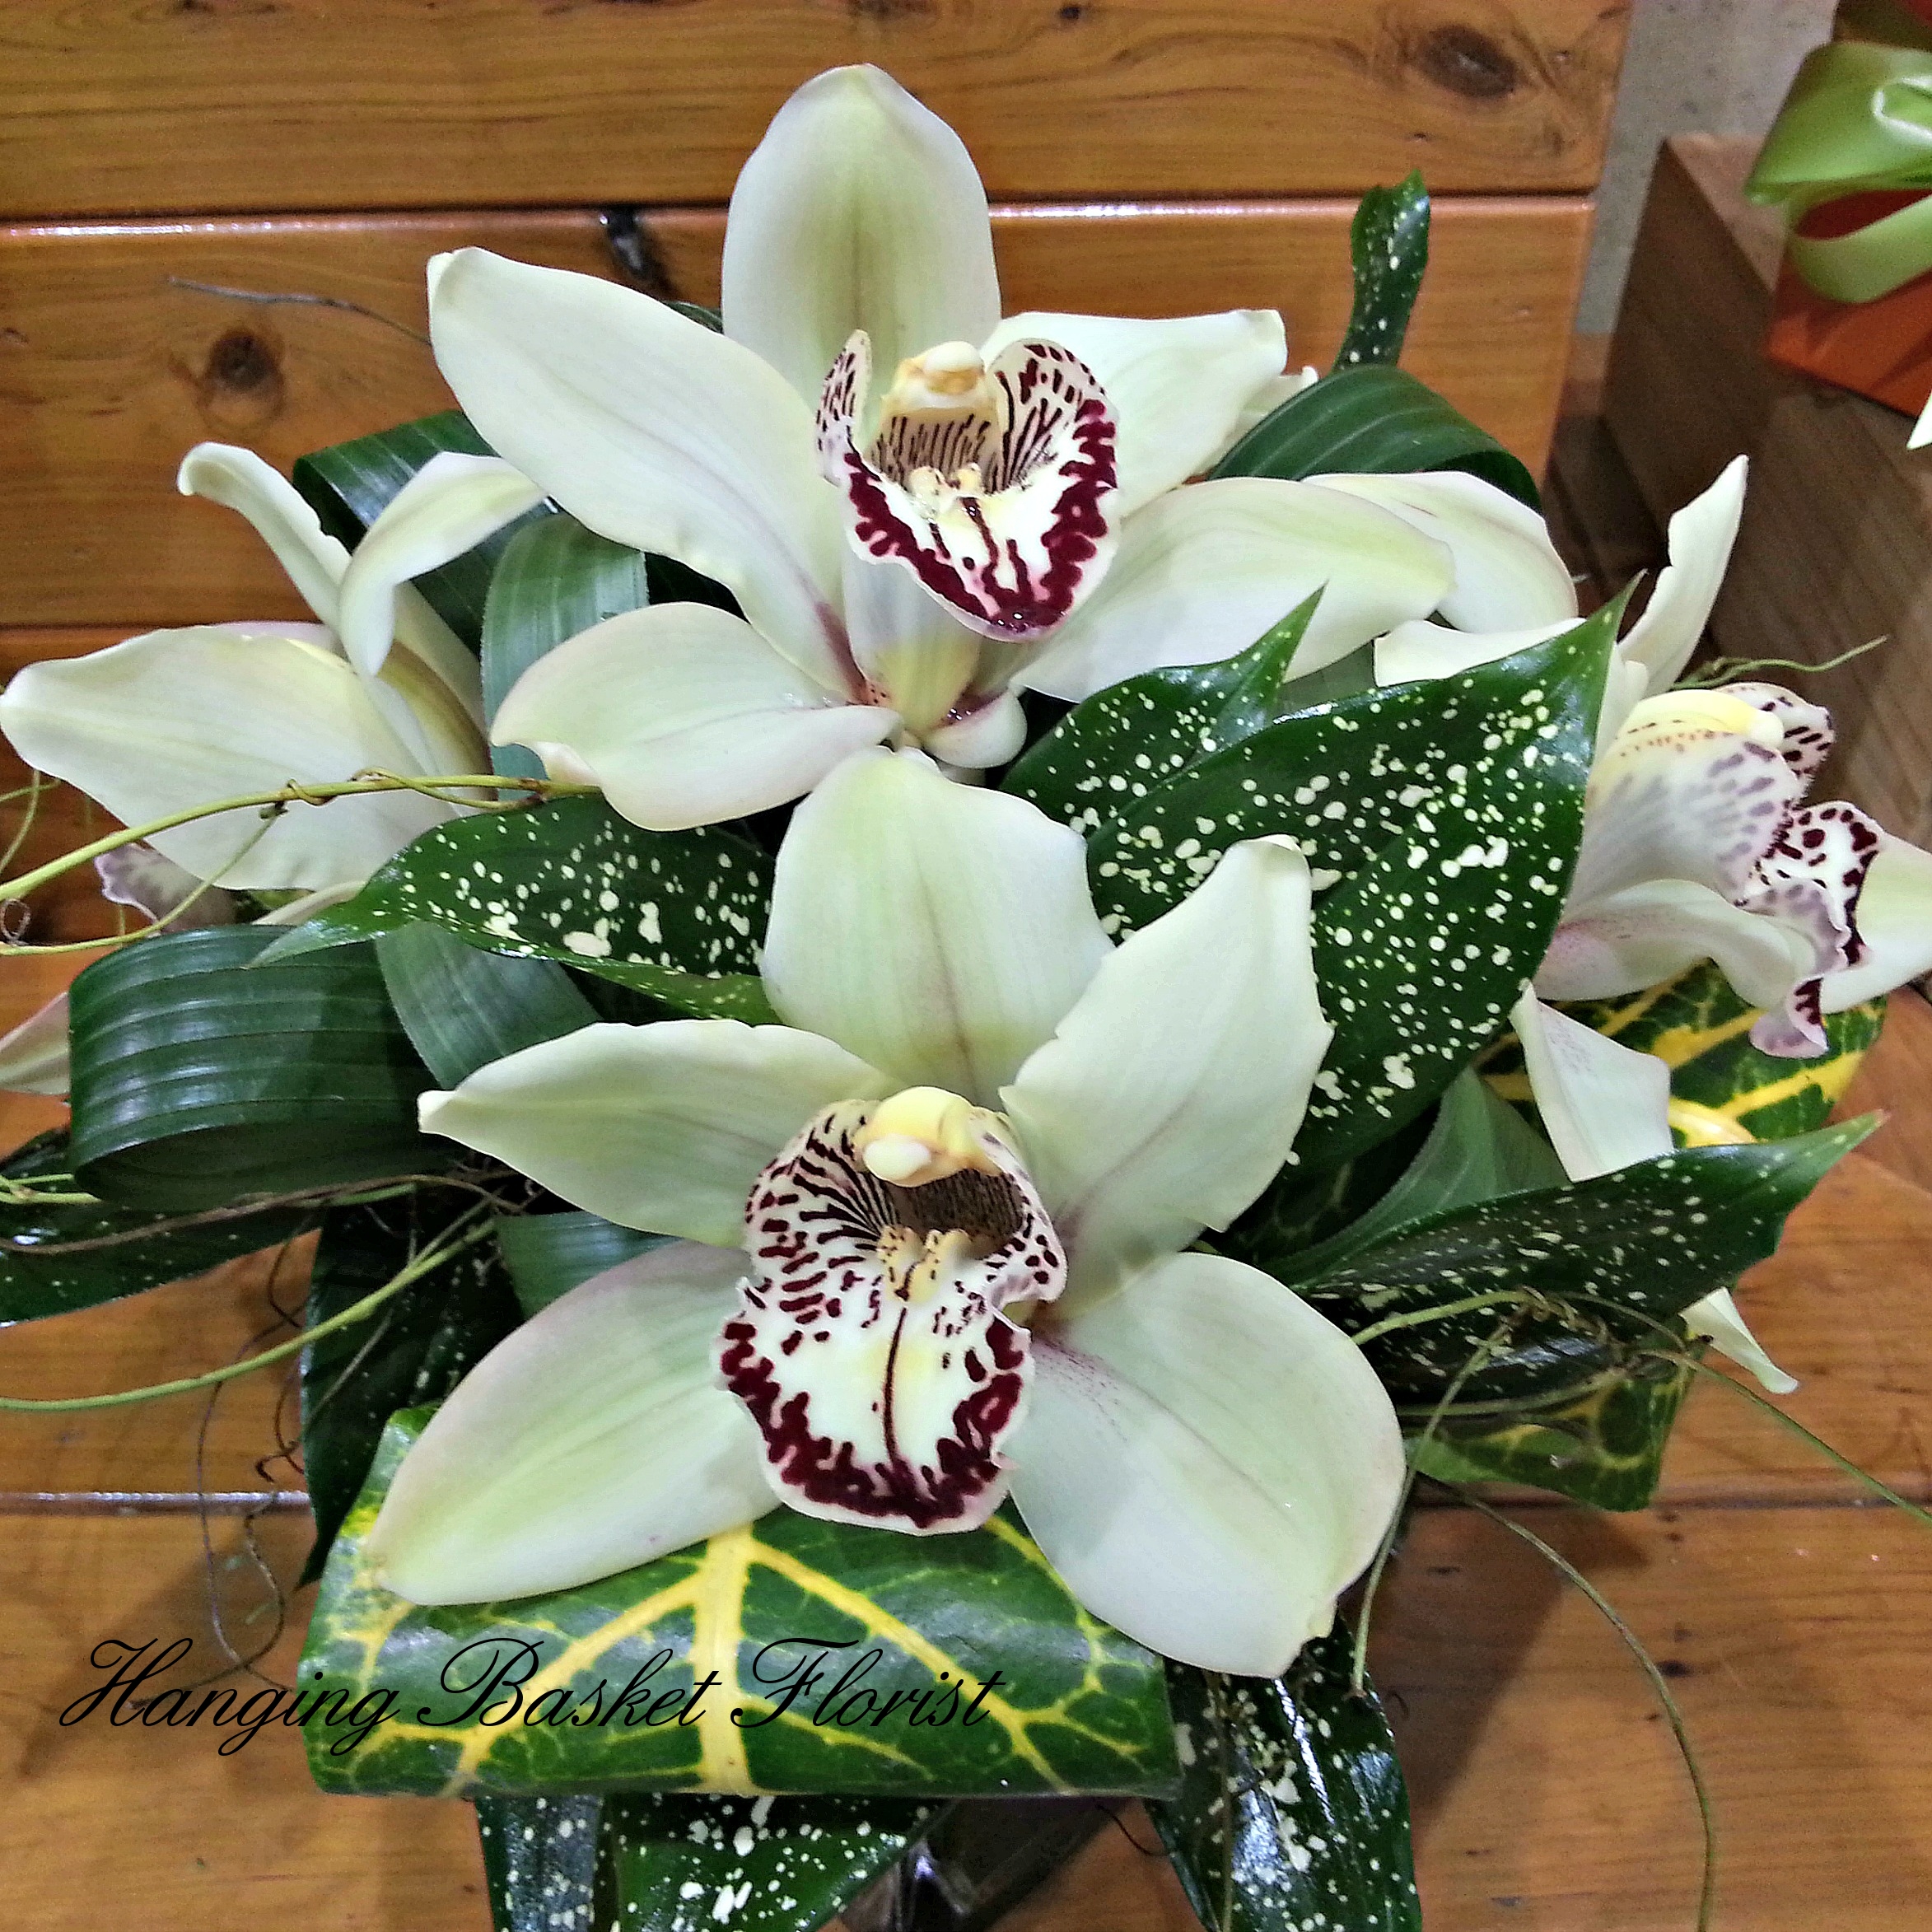 Cymbidium Orchid Vase Hanging Basket Florist Rockingham